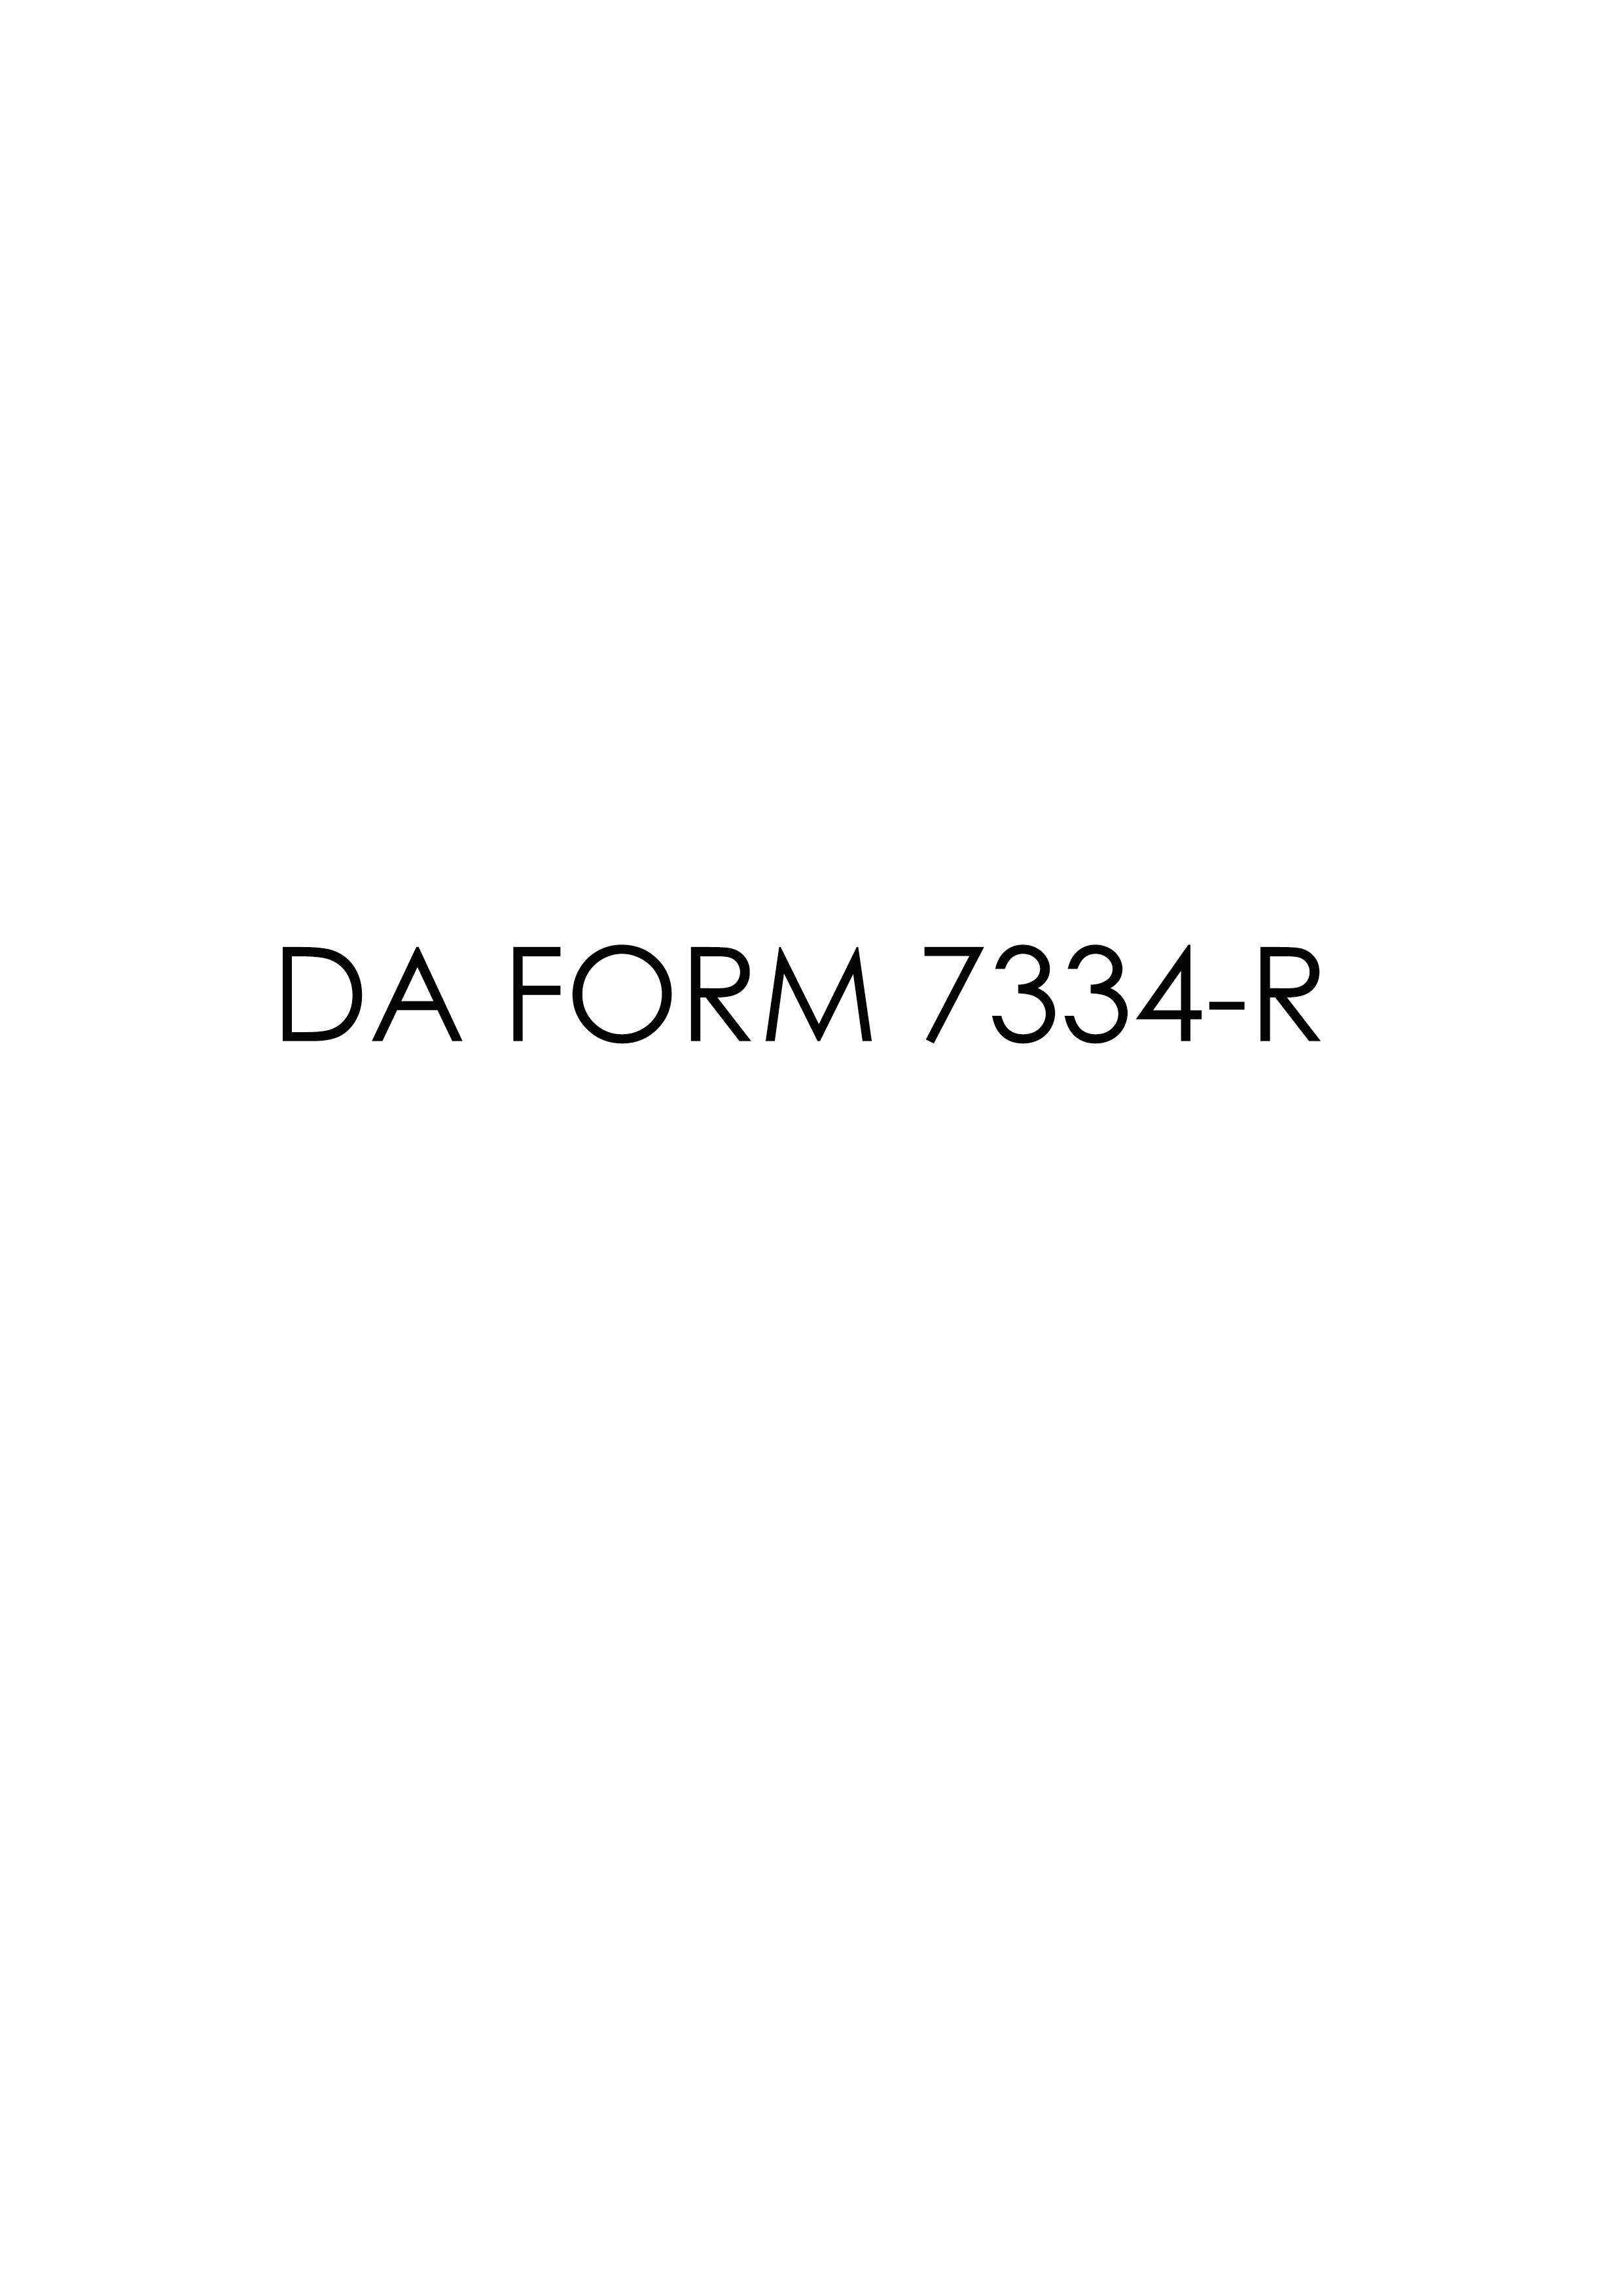 da Form 7334-R fillable